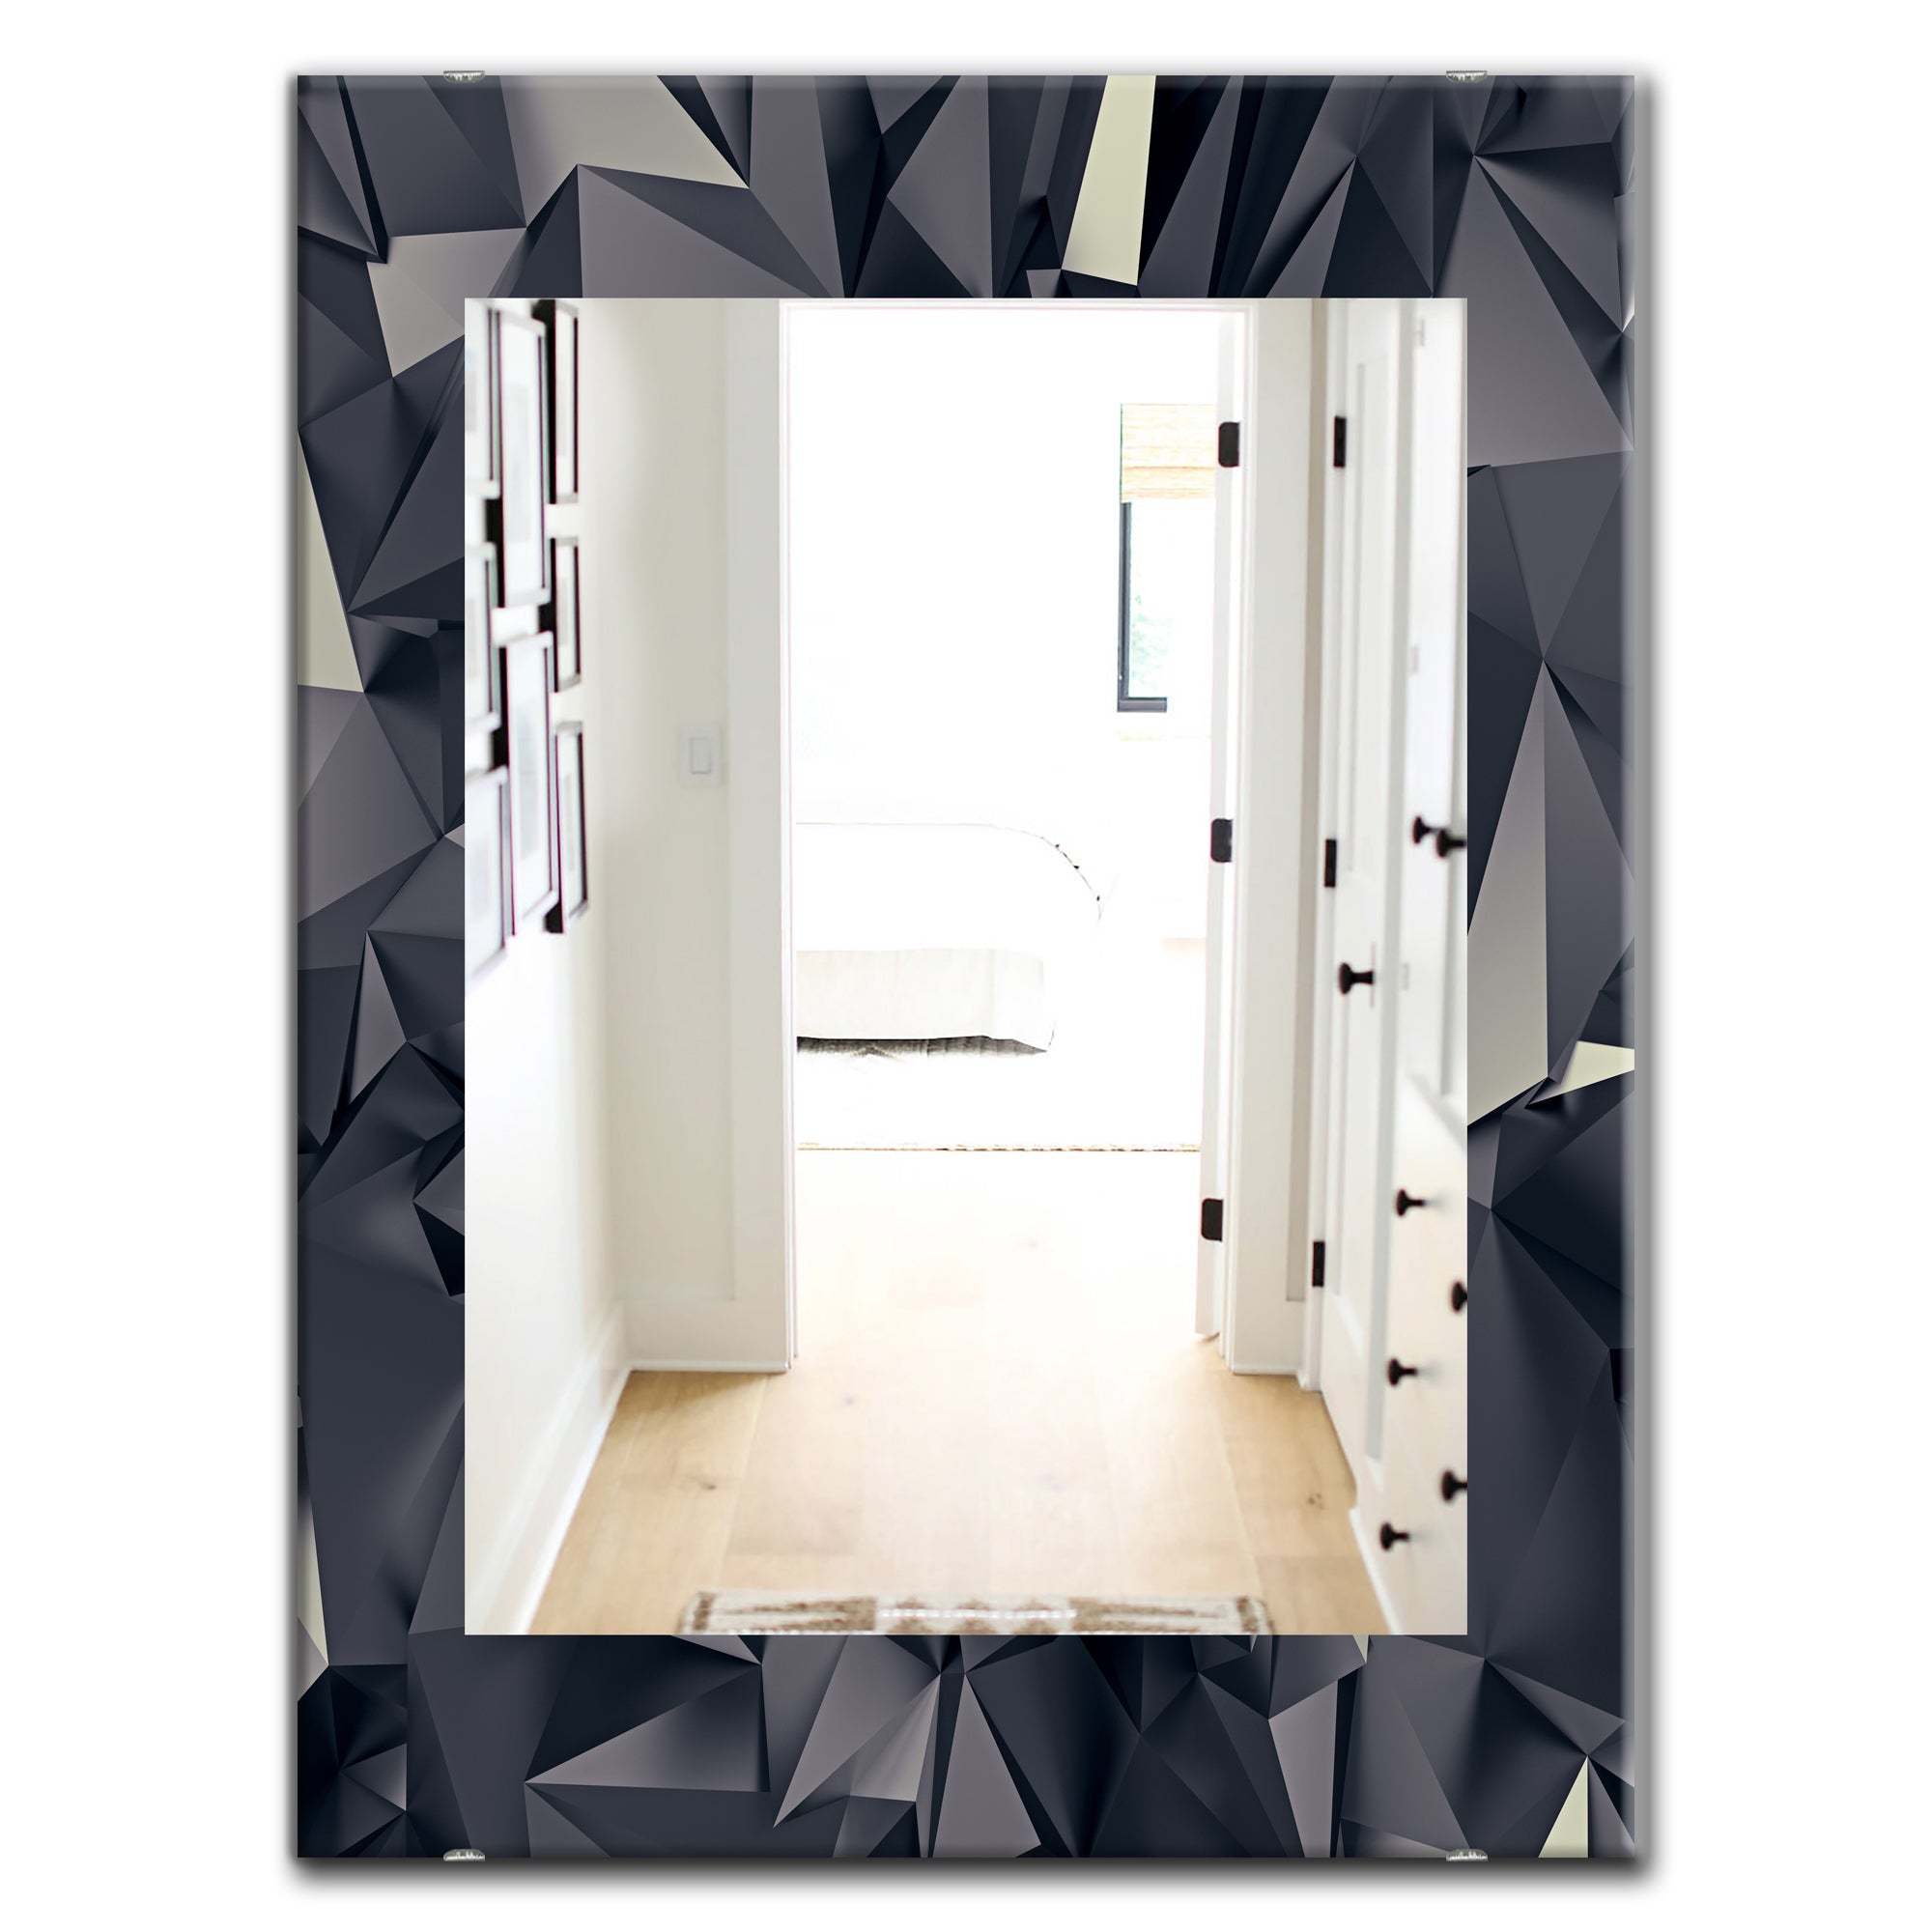 Shades Of Black' Modern Mirror - Oval or Round Wall Mirror